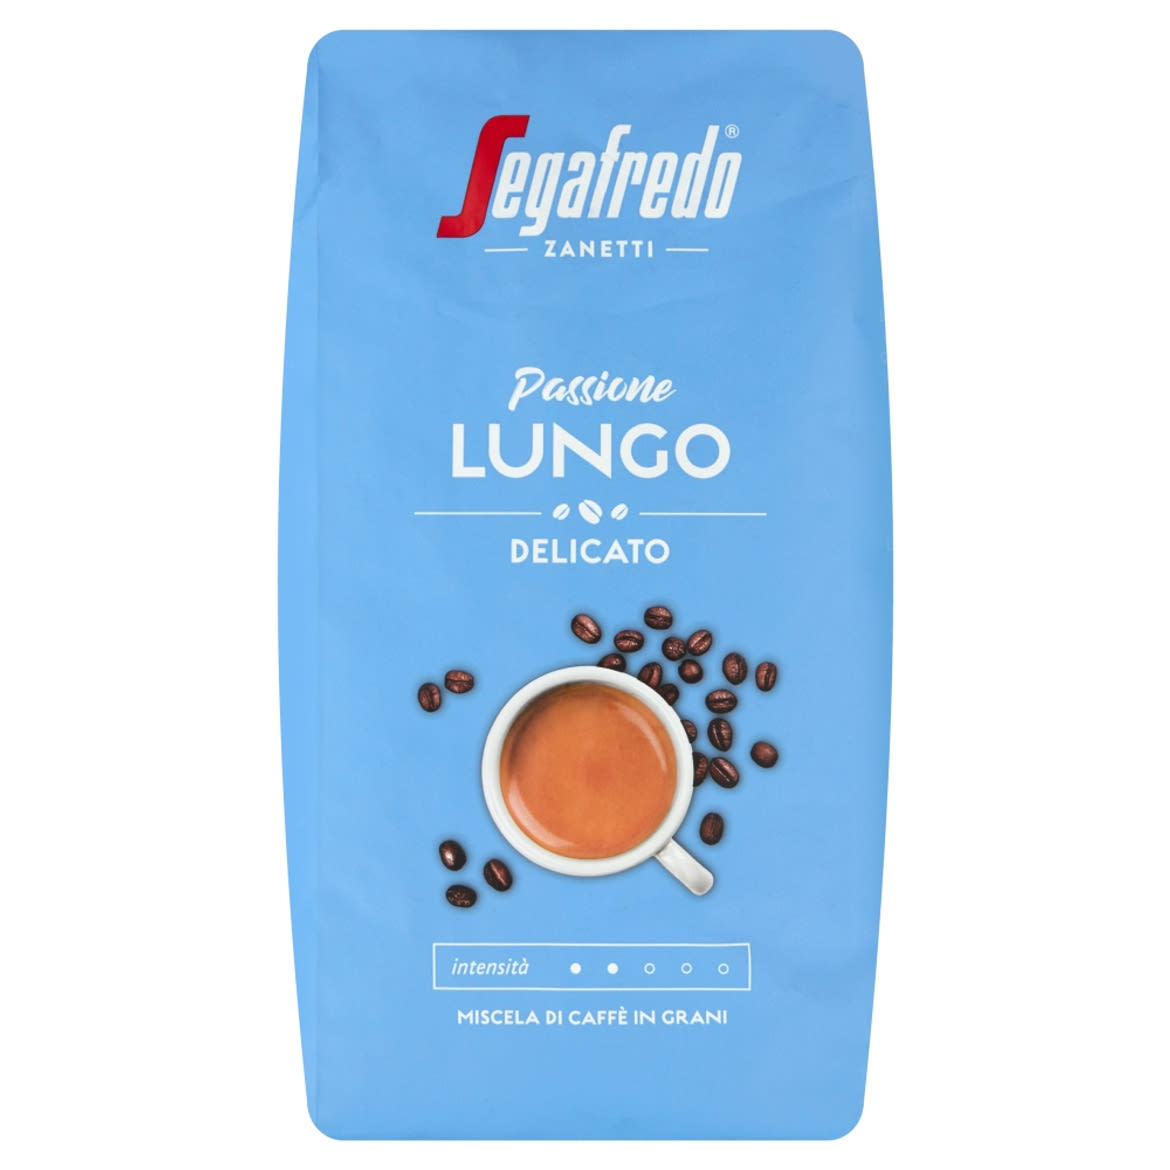 Segafredo Zanetti Passione Lungo Delicato szemes pörkölt kávé